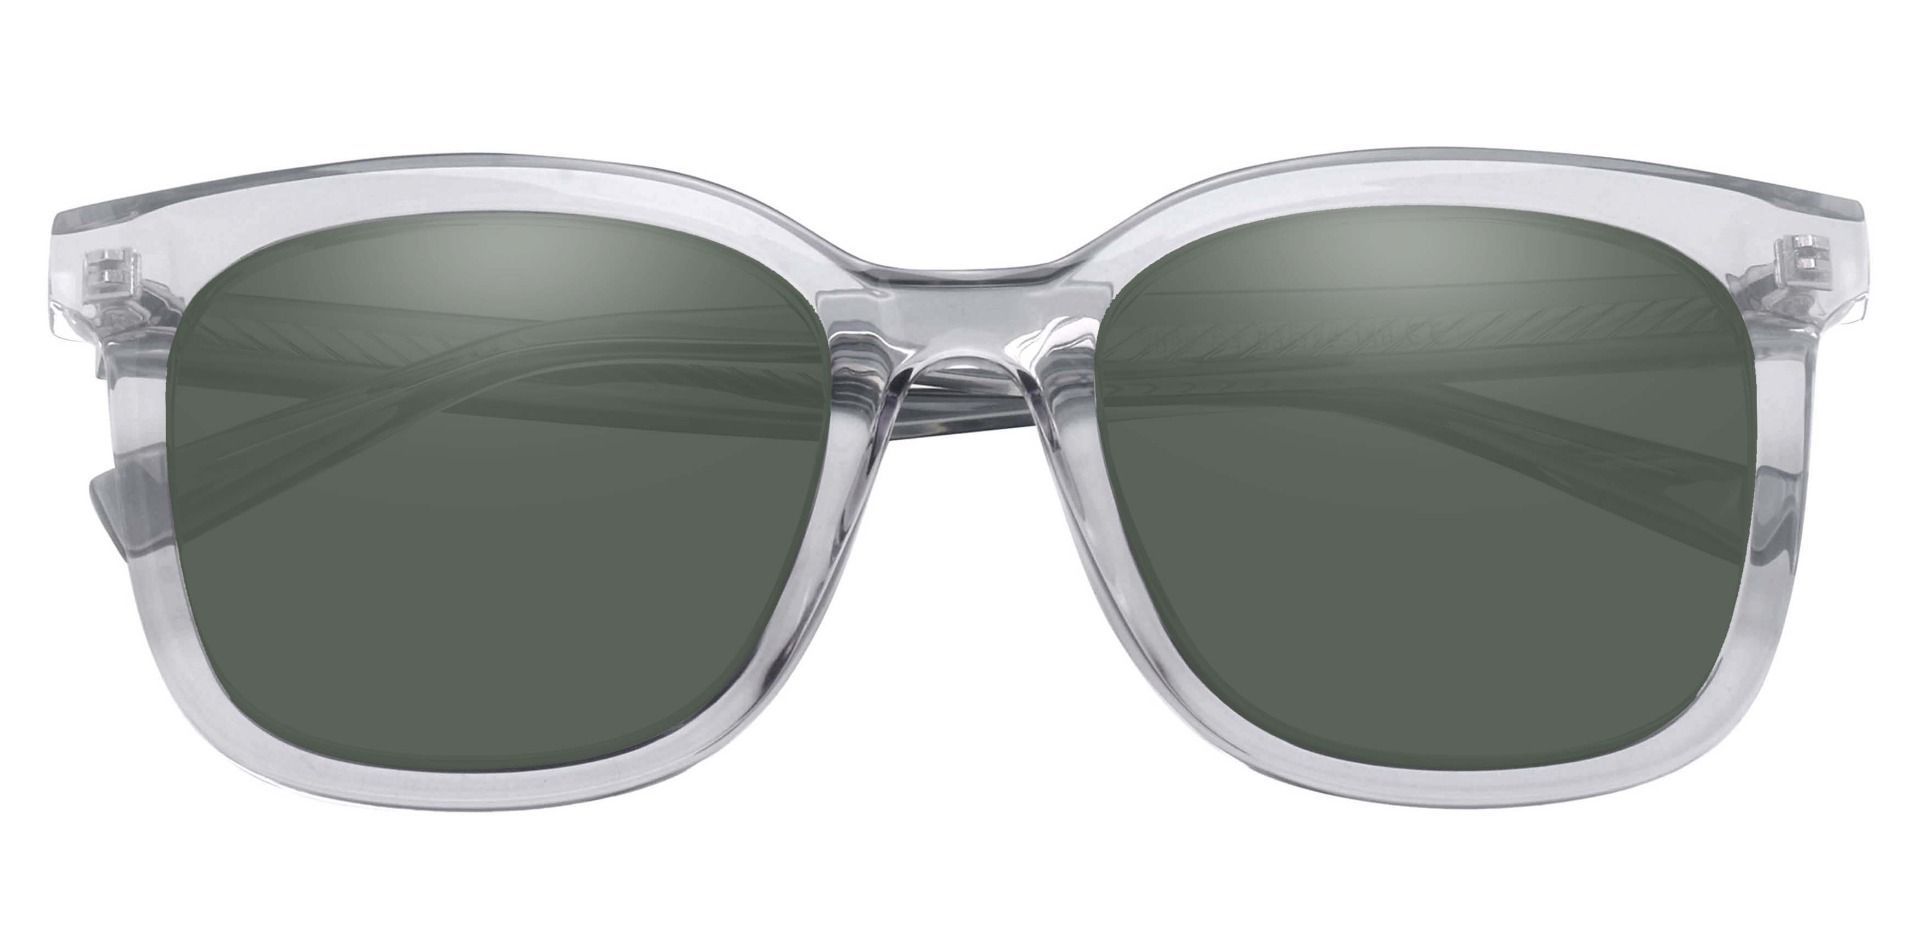 Irving Square Prescription Sunglasses - Gray Frame With Green Lenses